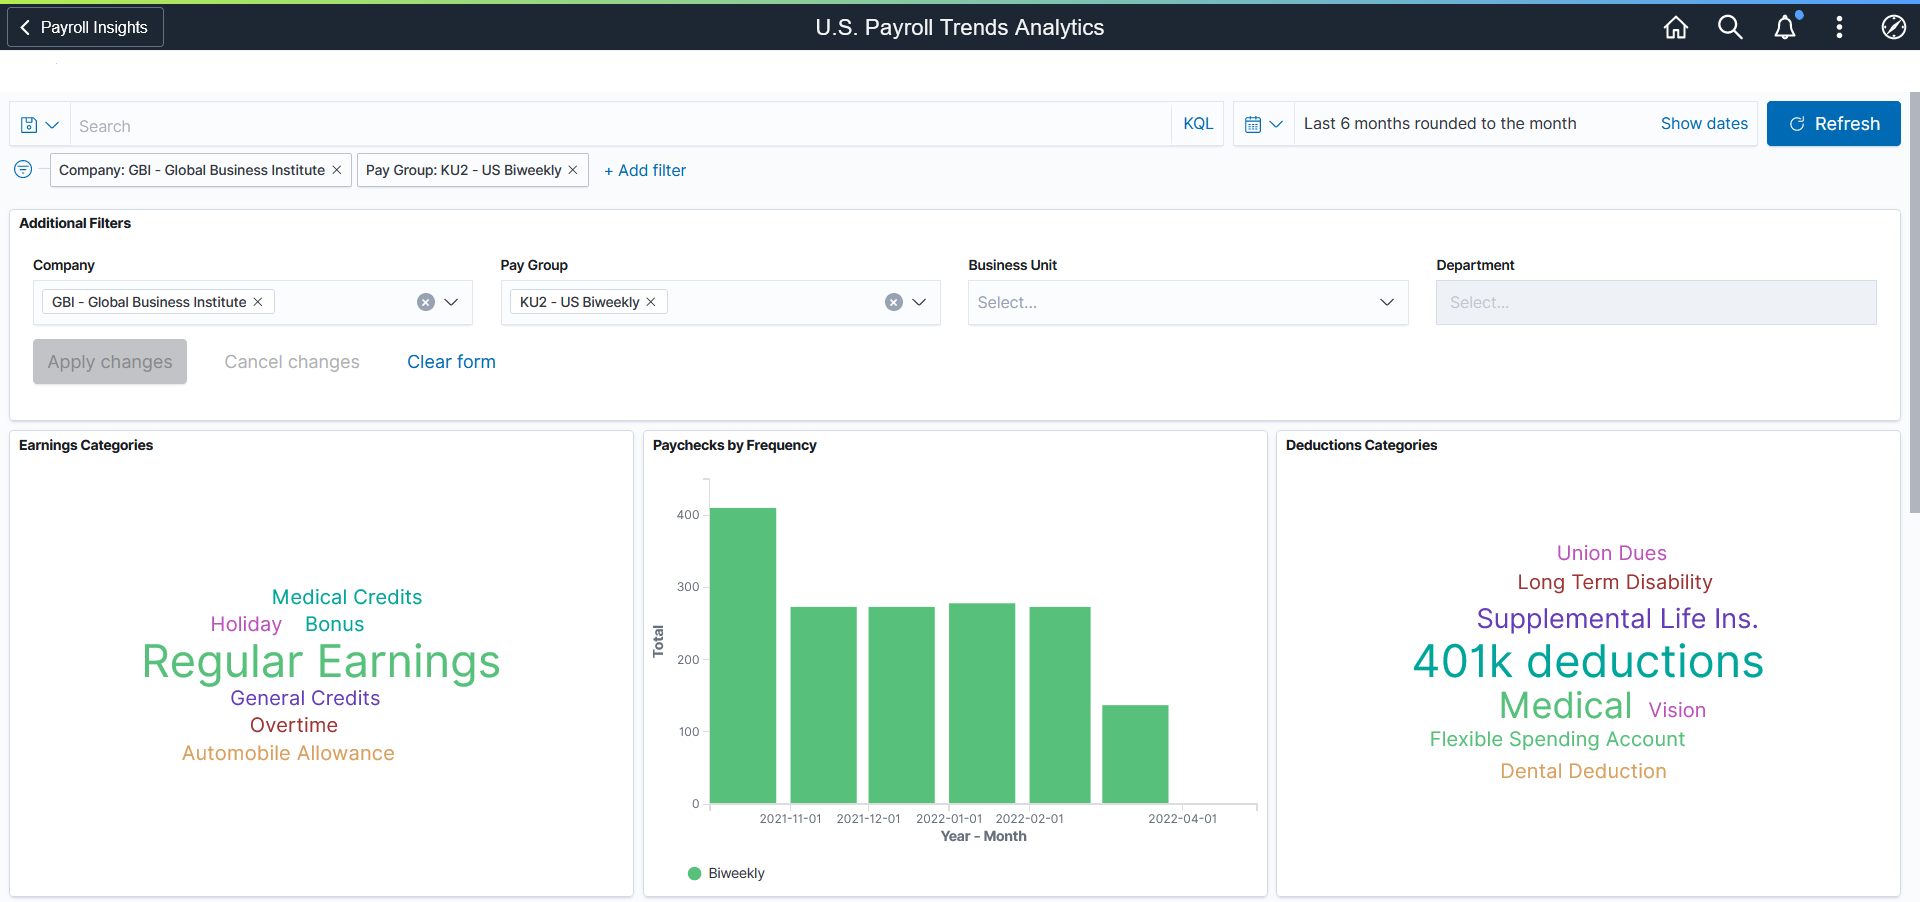 U.S. Payroll Trends Analytics dashboard (1 of 3)